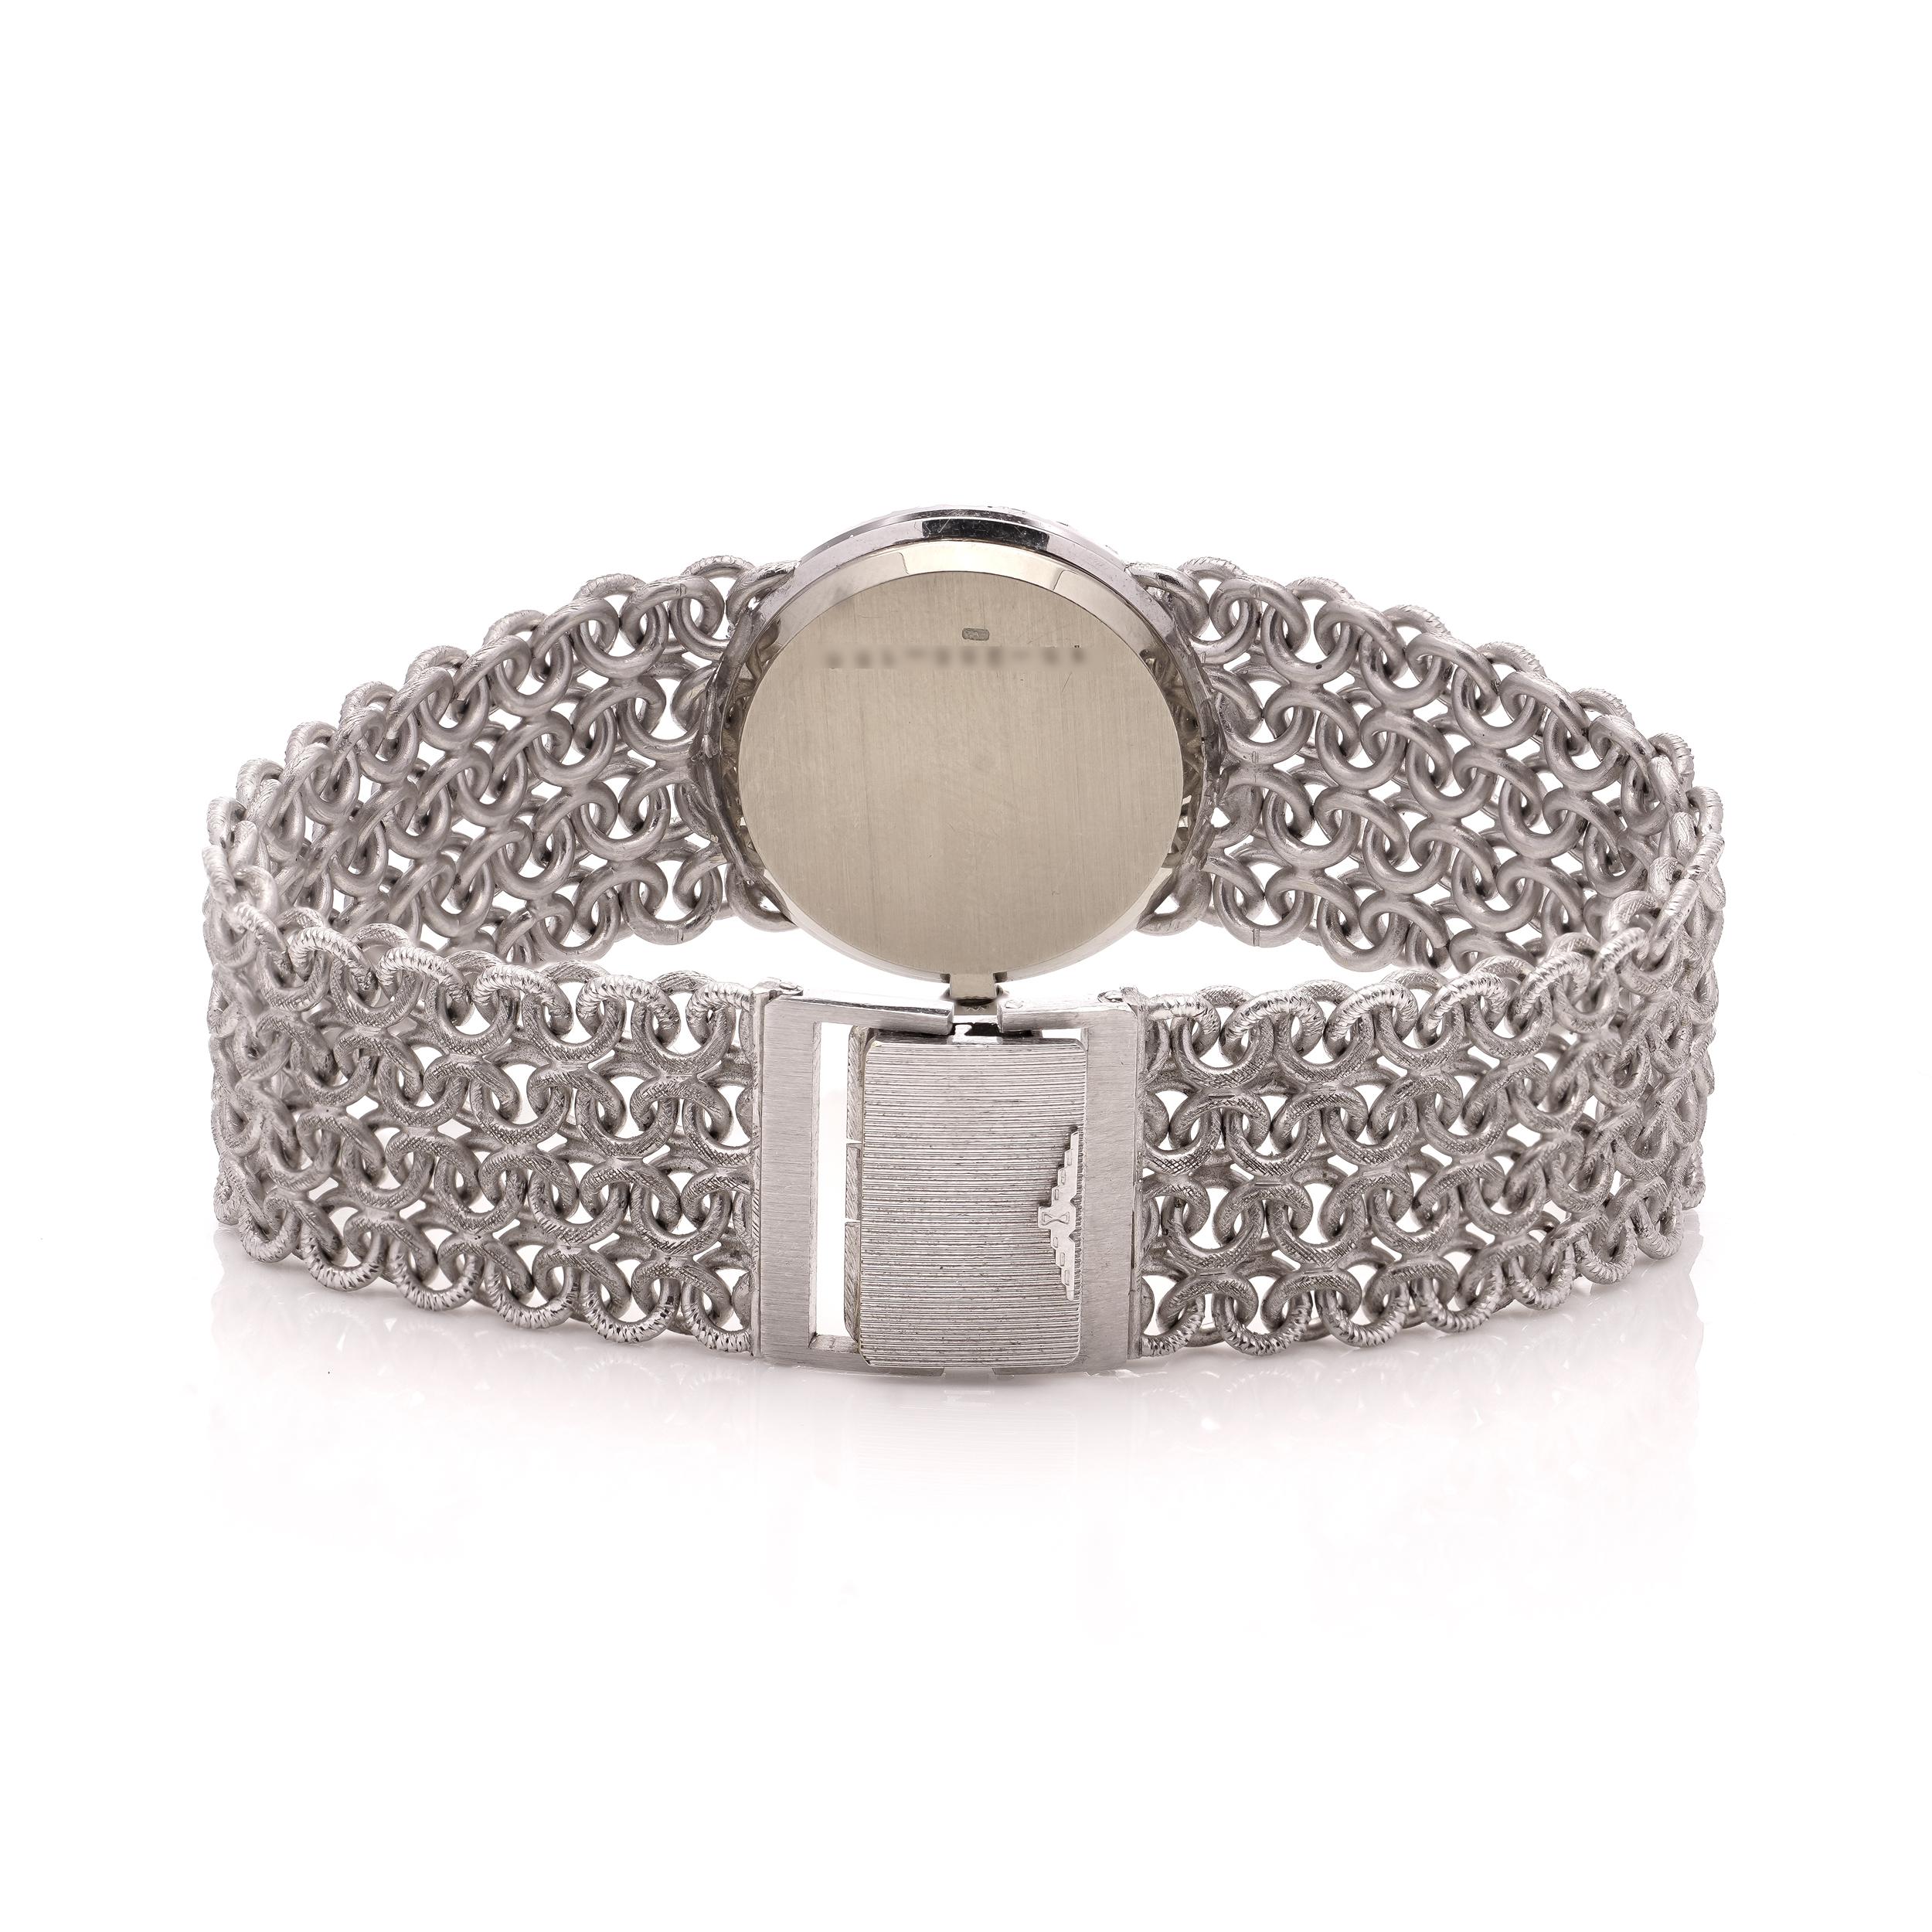 Longines 18kt. white gold ladies' wristwatch with diamond-set bezel For Sale 1